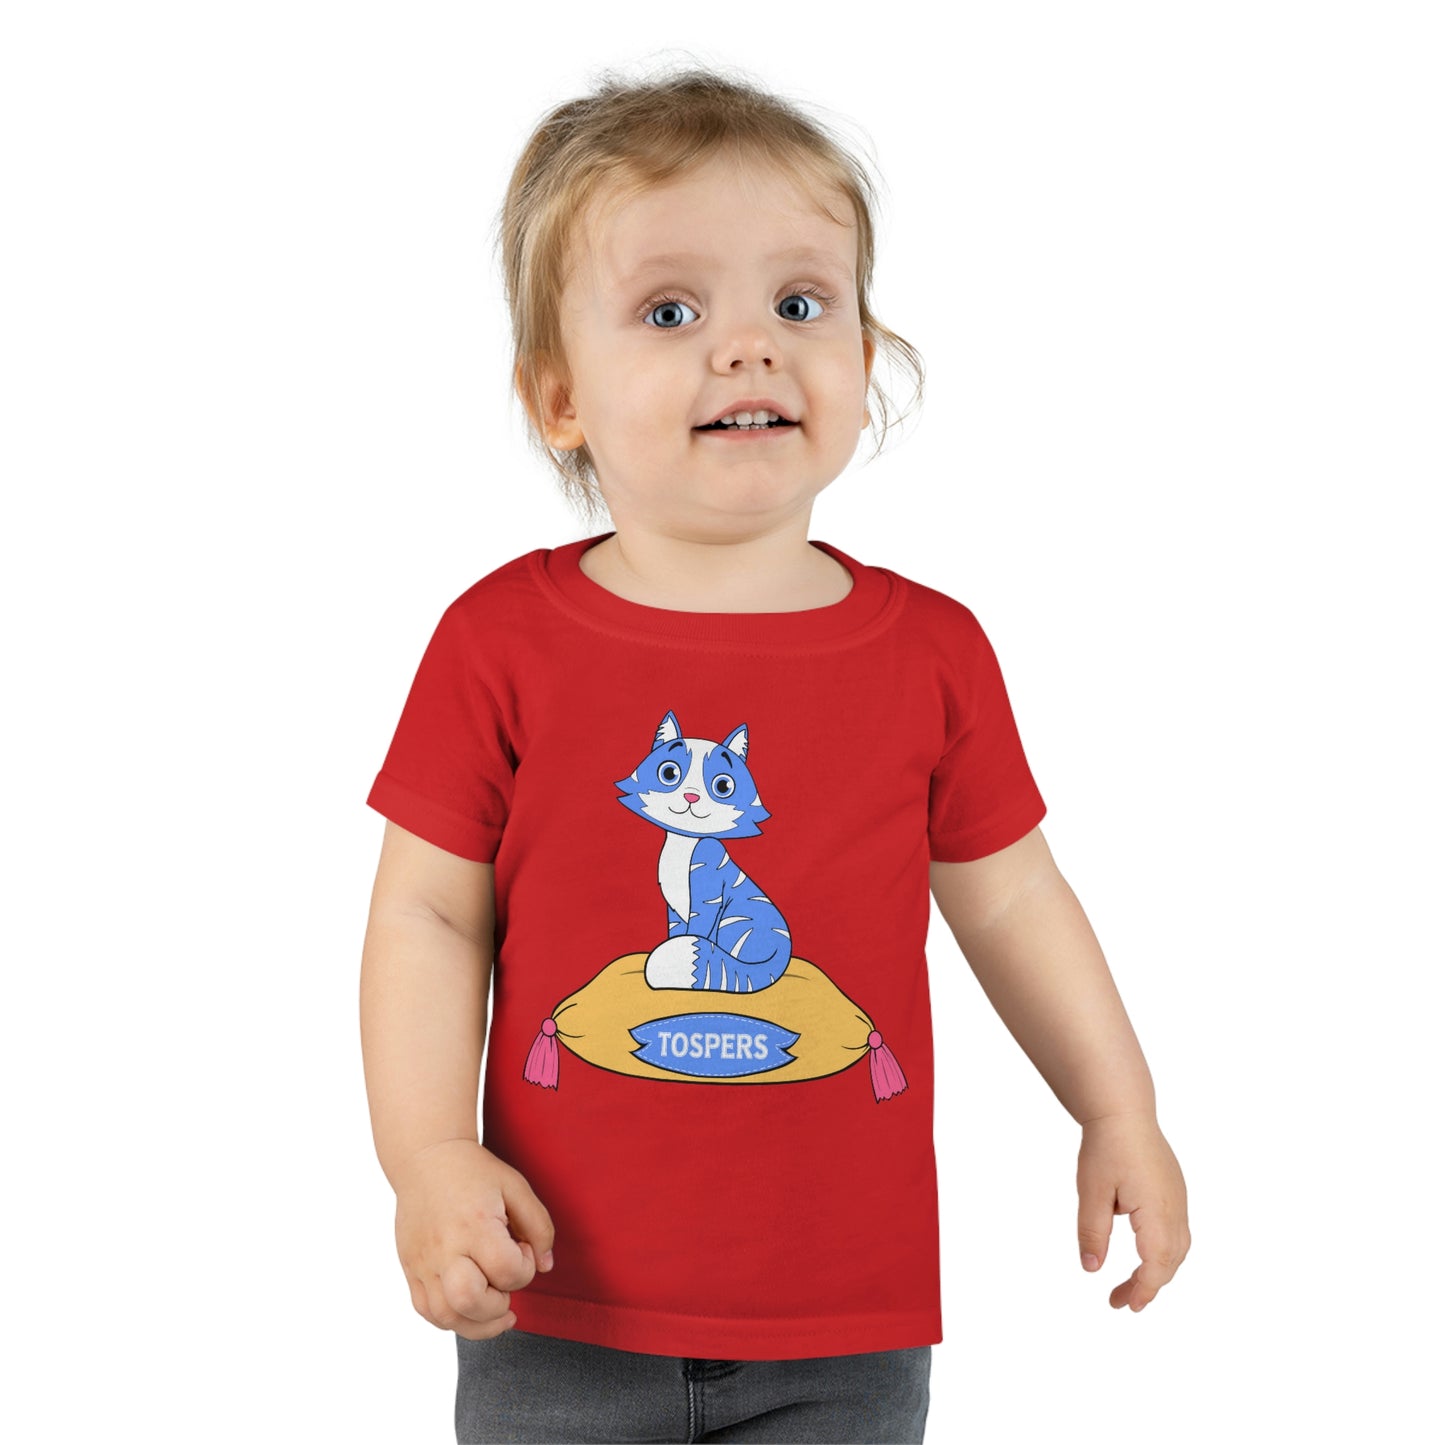 Tospers Toddler T-shirt